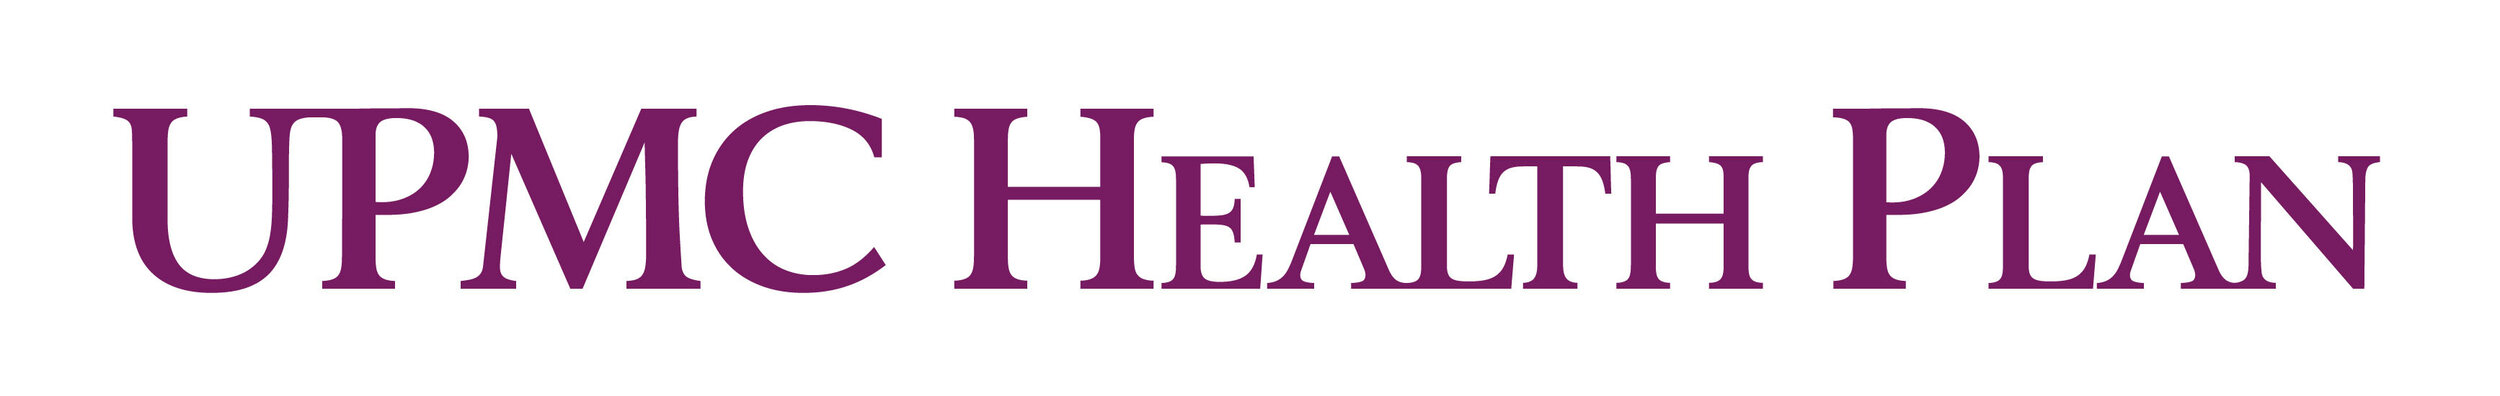 UPMC Health Plan Logo in Color 2016.jpg